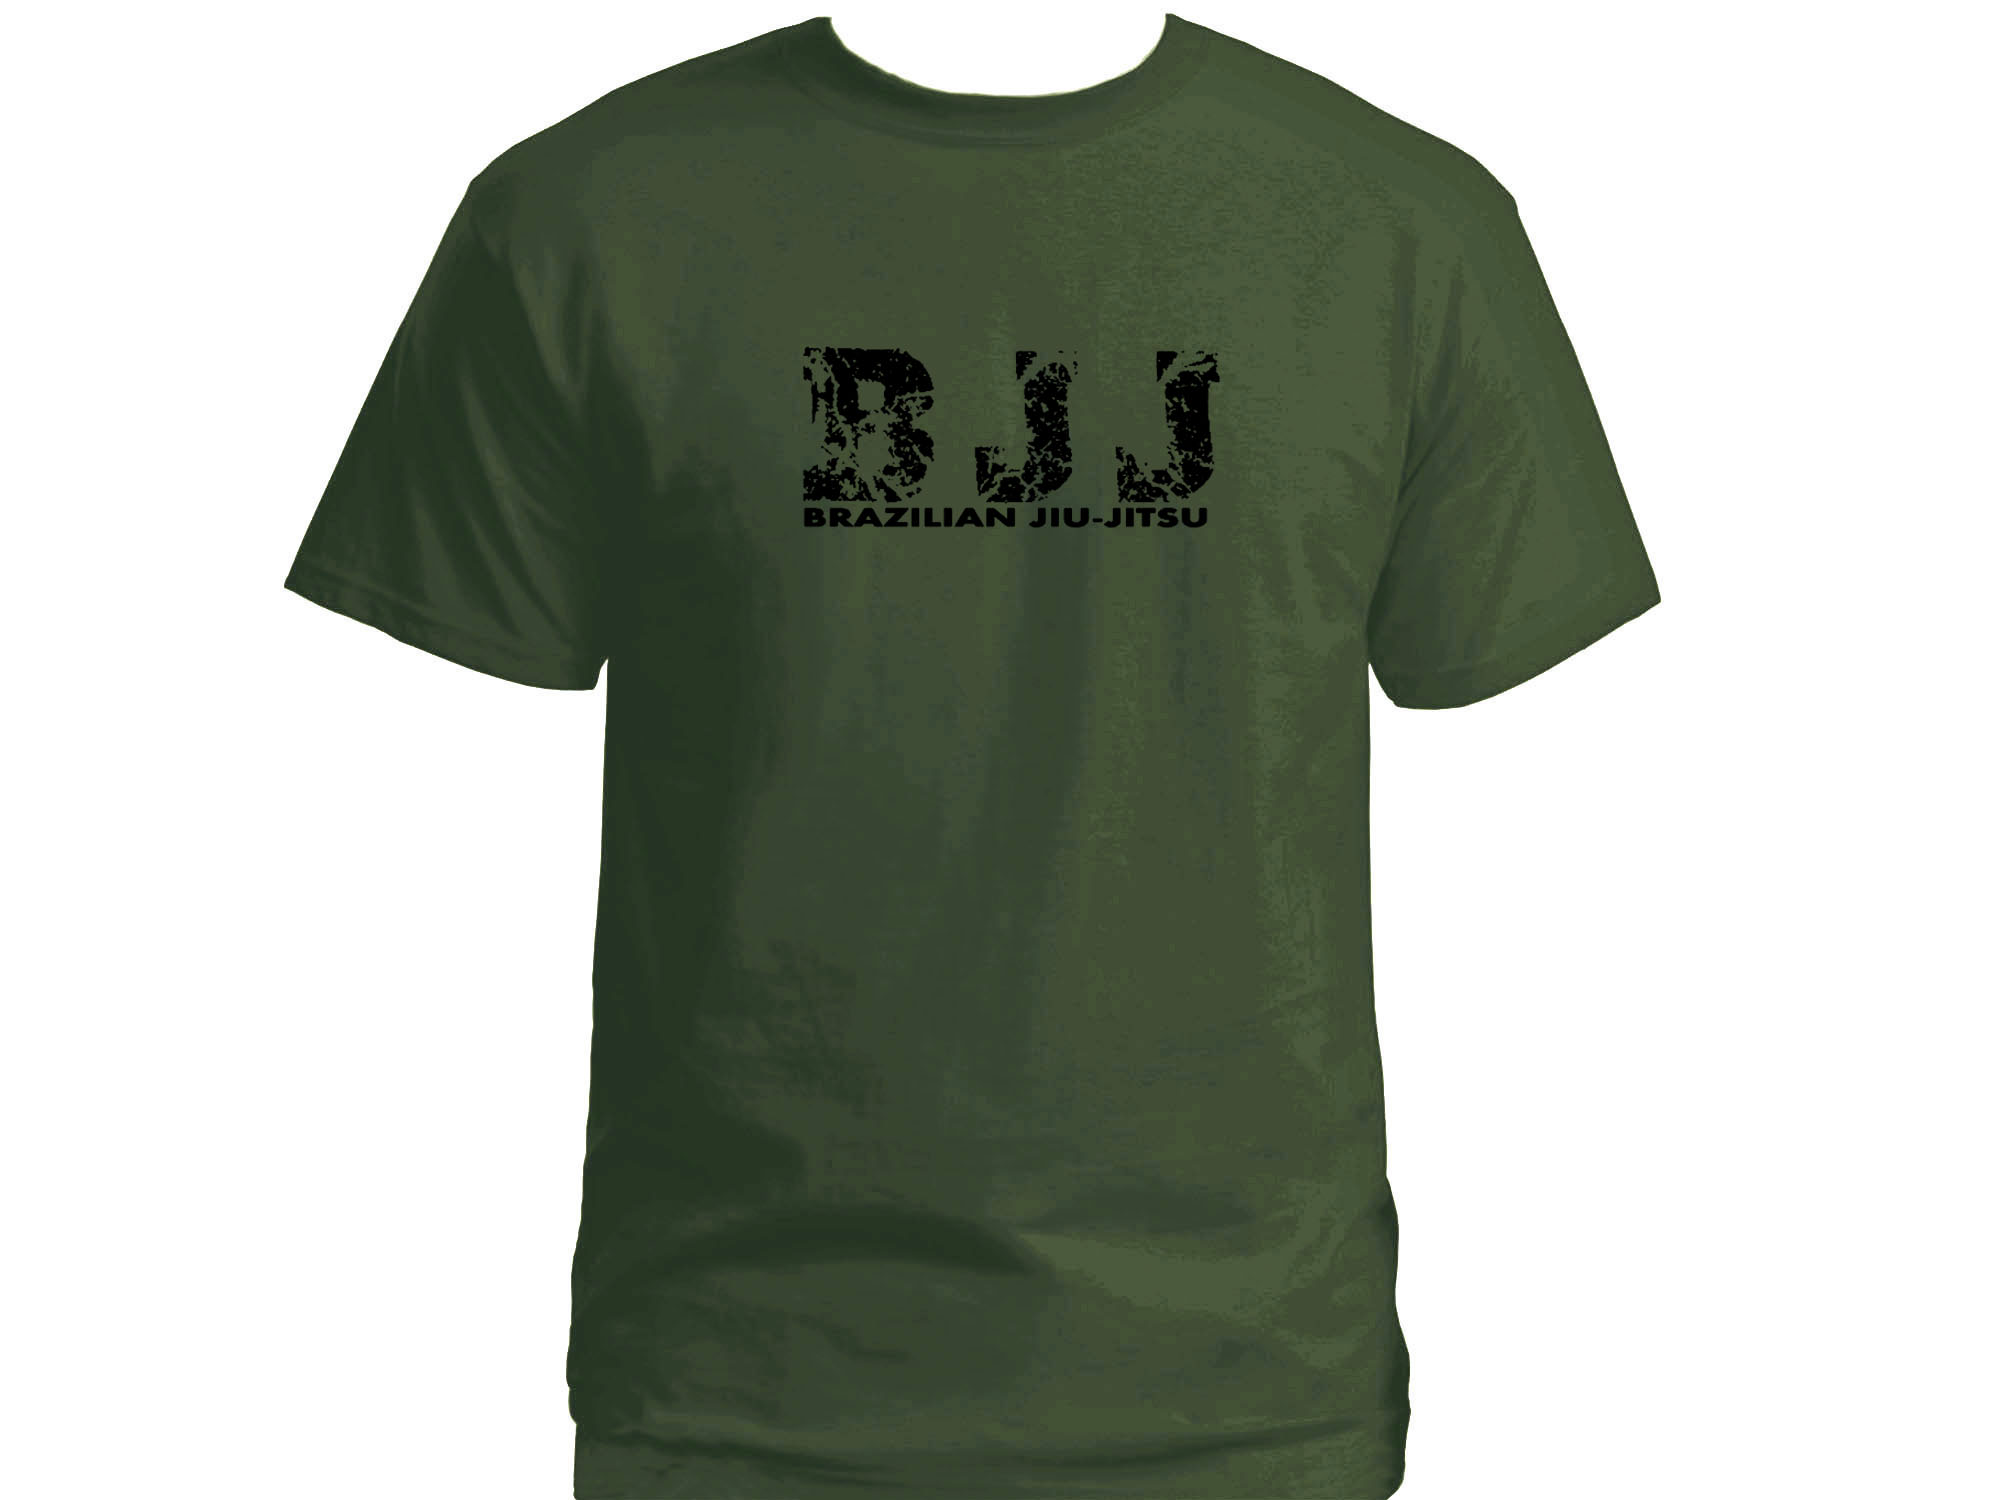 BJJ Brazilian Jiu jitsu jitzu distressed look army green t shirt